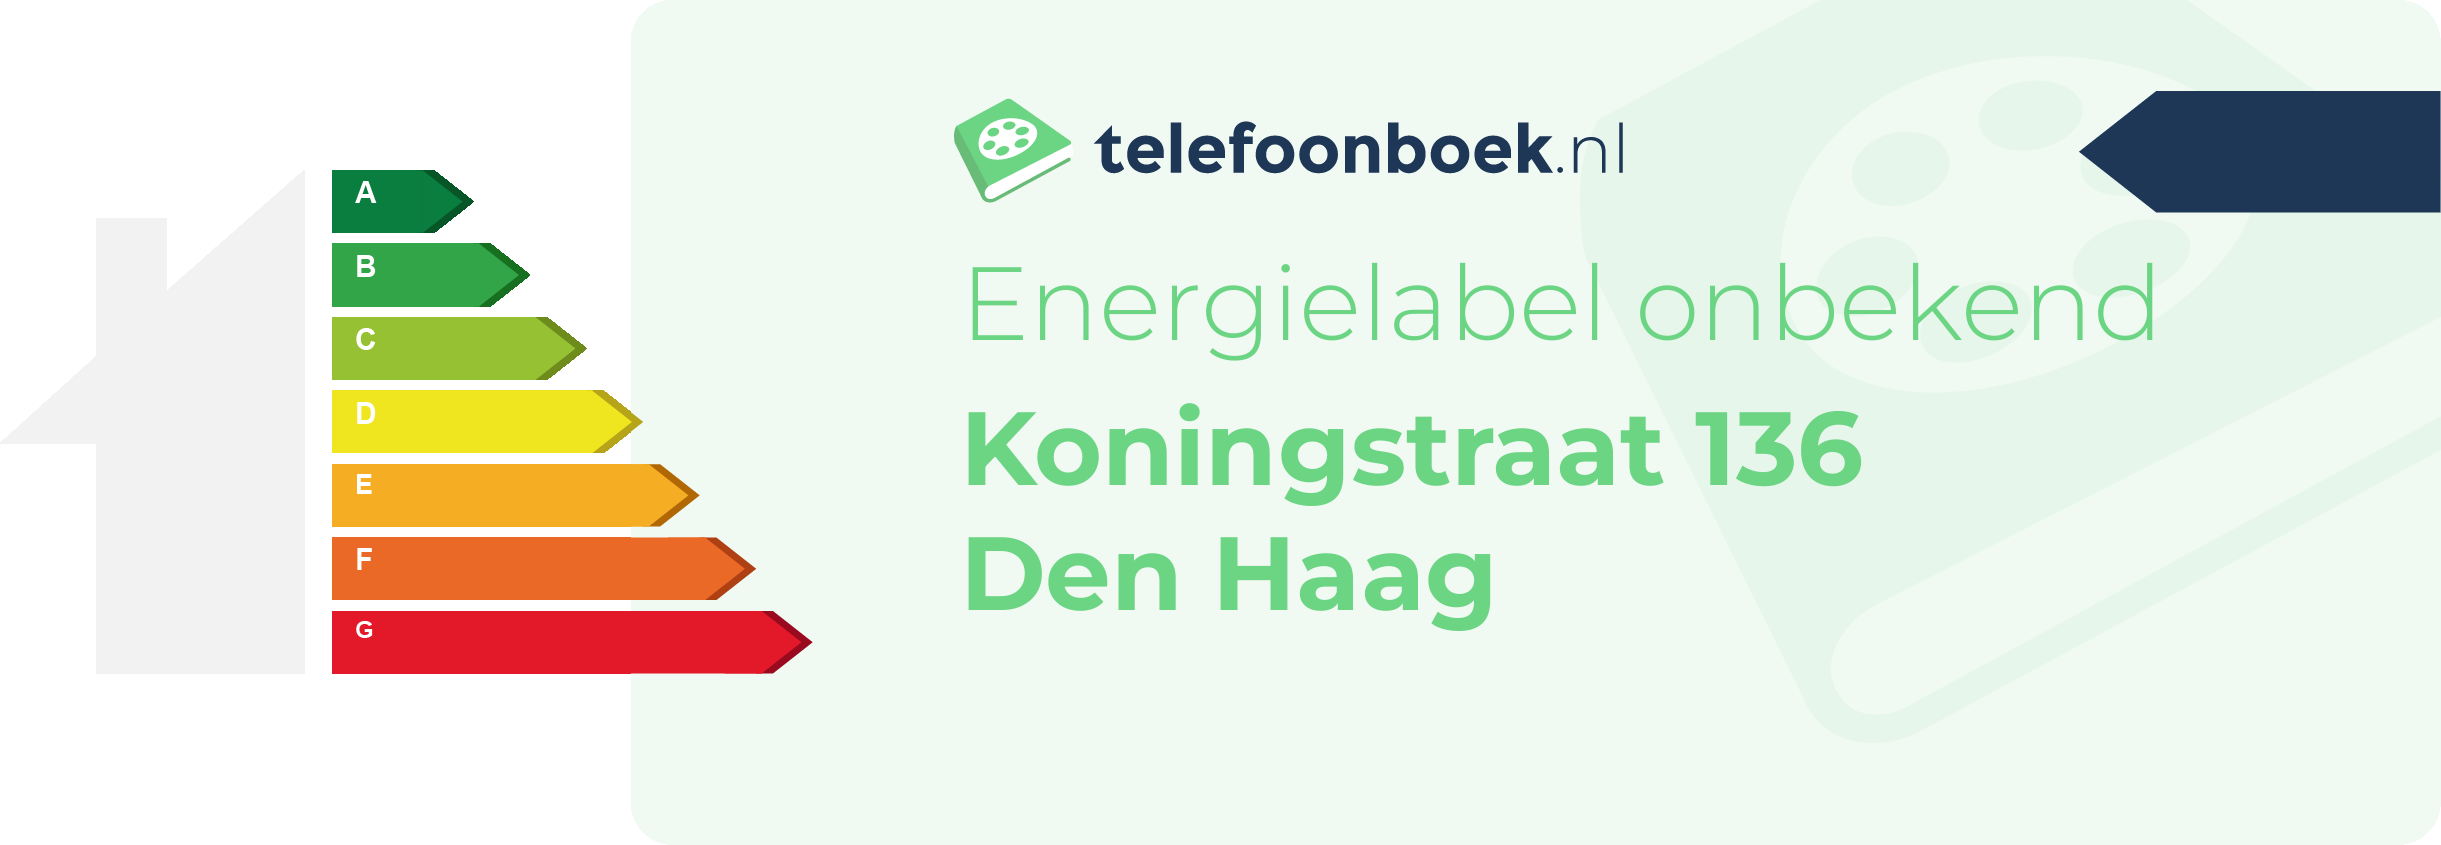 Energielabel Koningstraat 136 Den Haag